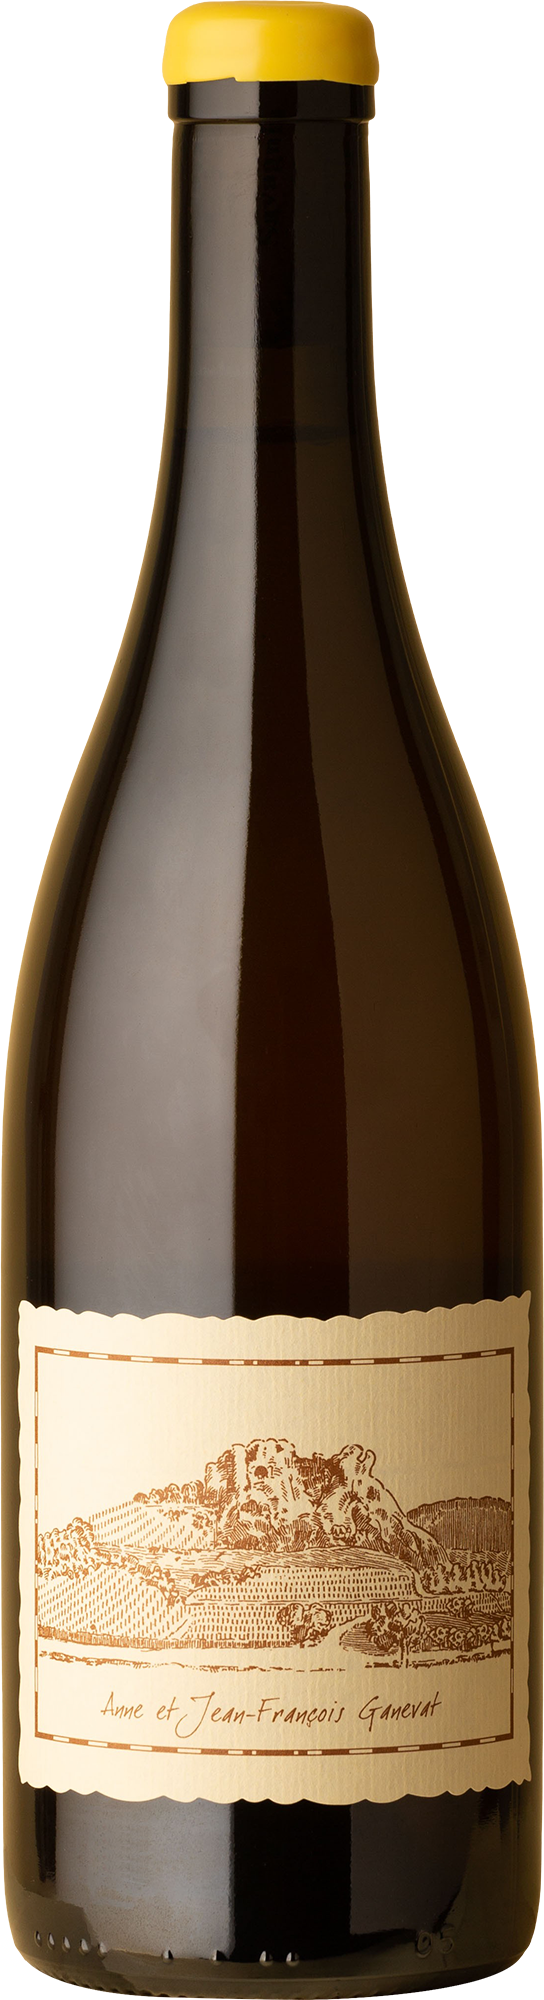 Anne & Jean-François Ganevat - Cotes du Jura Fortbeau Chardonnay 2018 White Wine